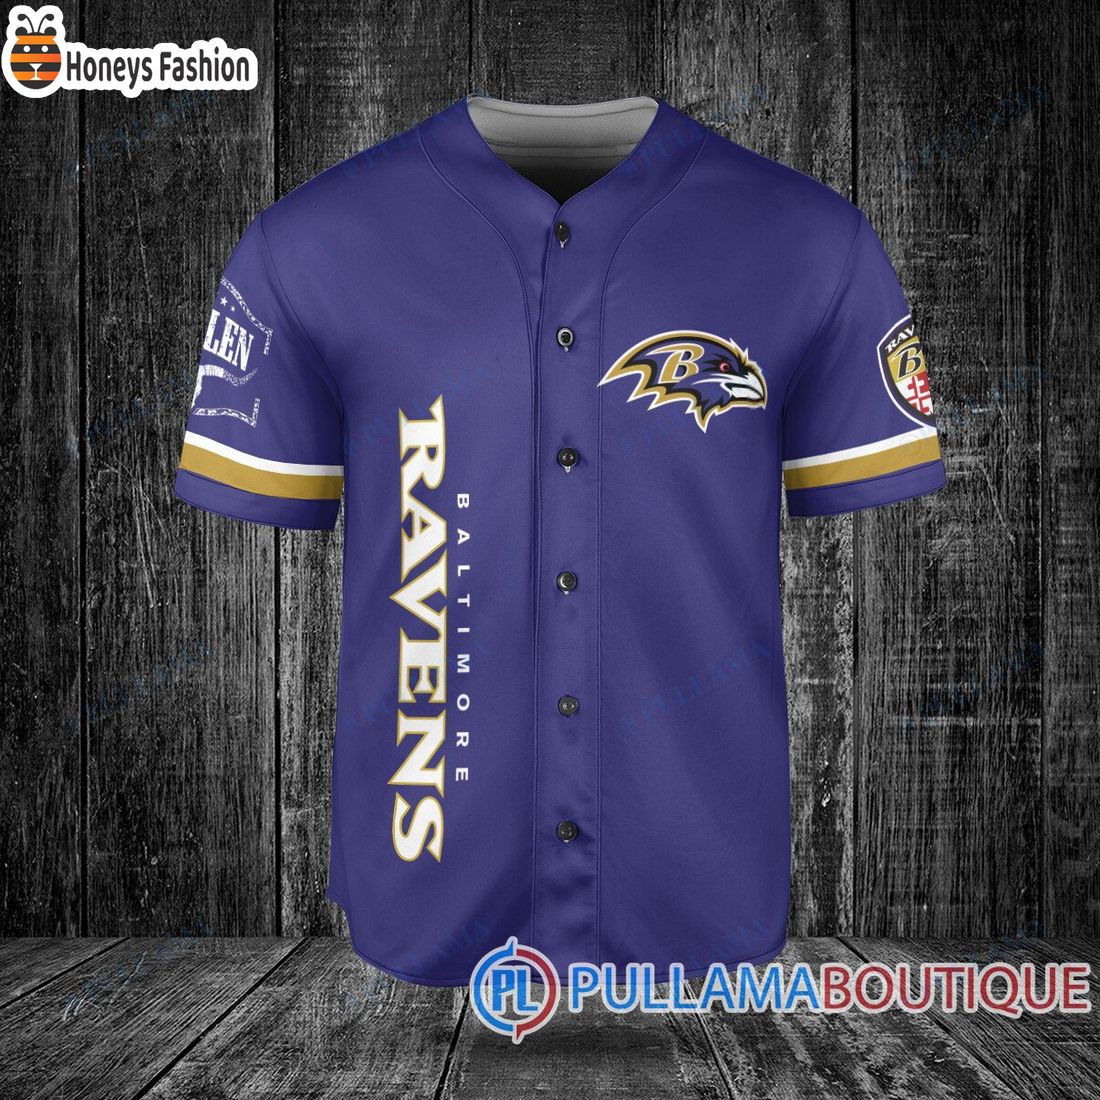 TOP SELLER Morgan Wallen Baltimore Ravens Custom Baseball Jersey